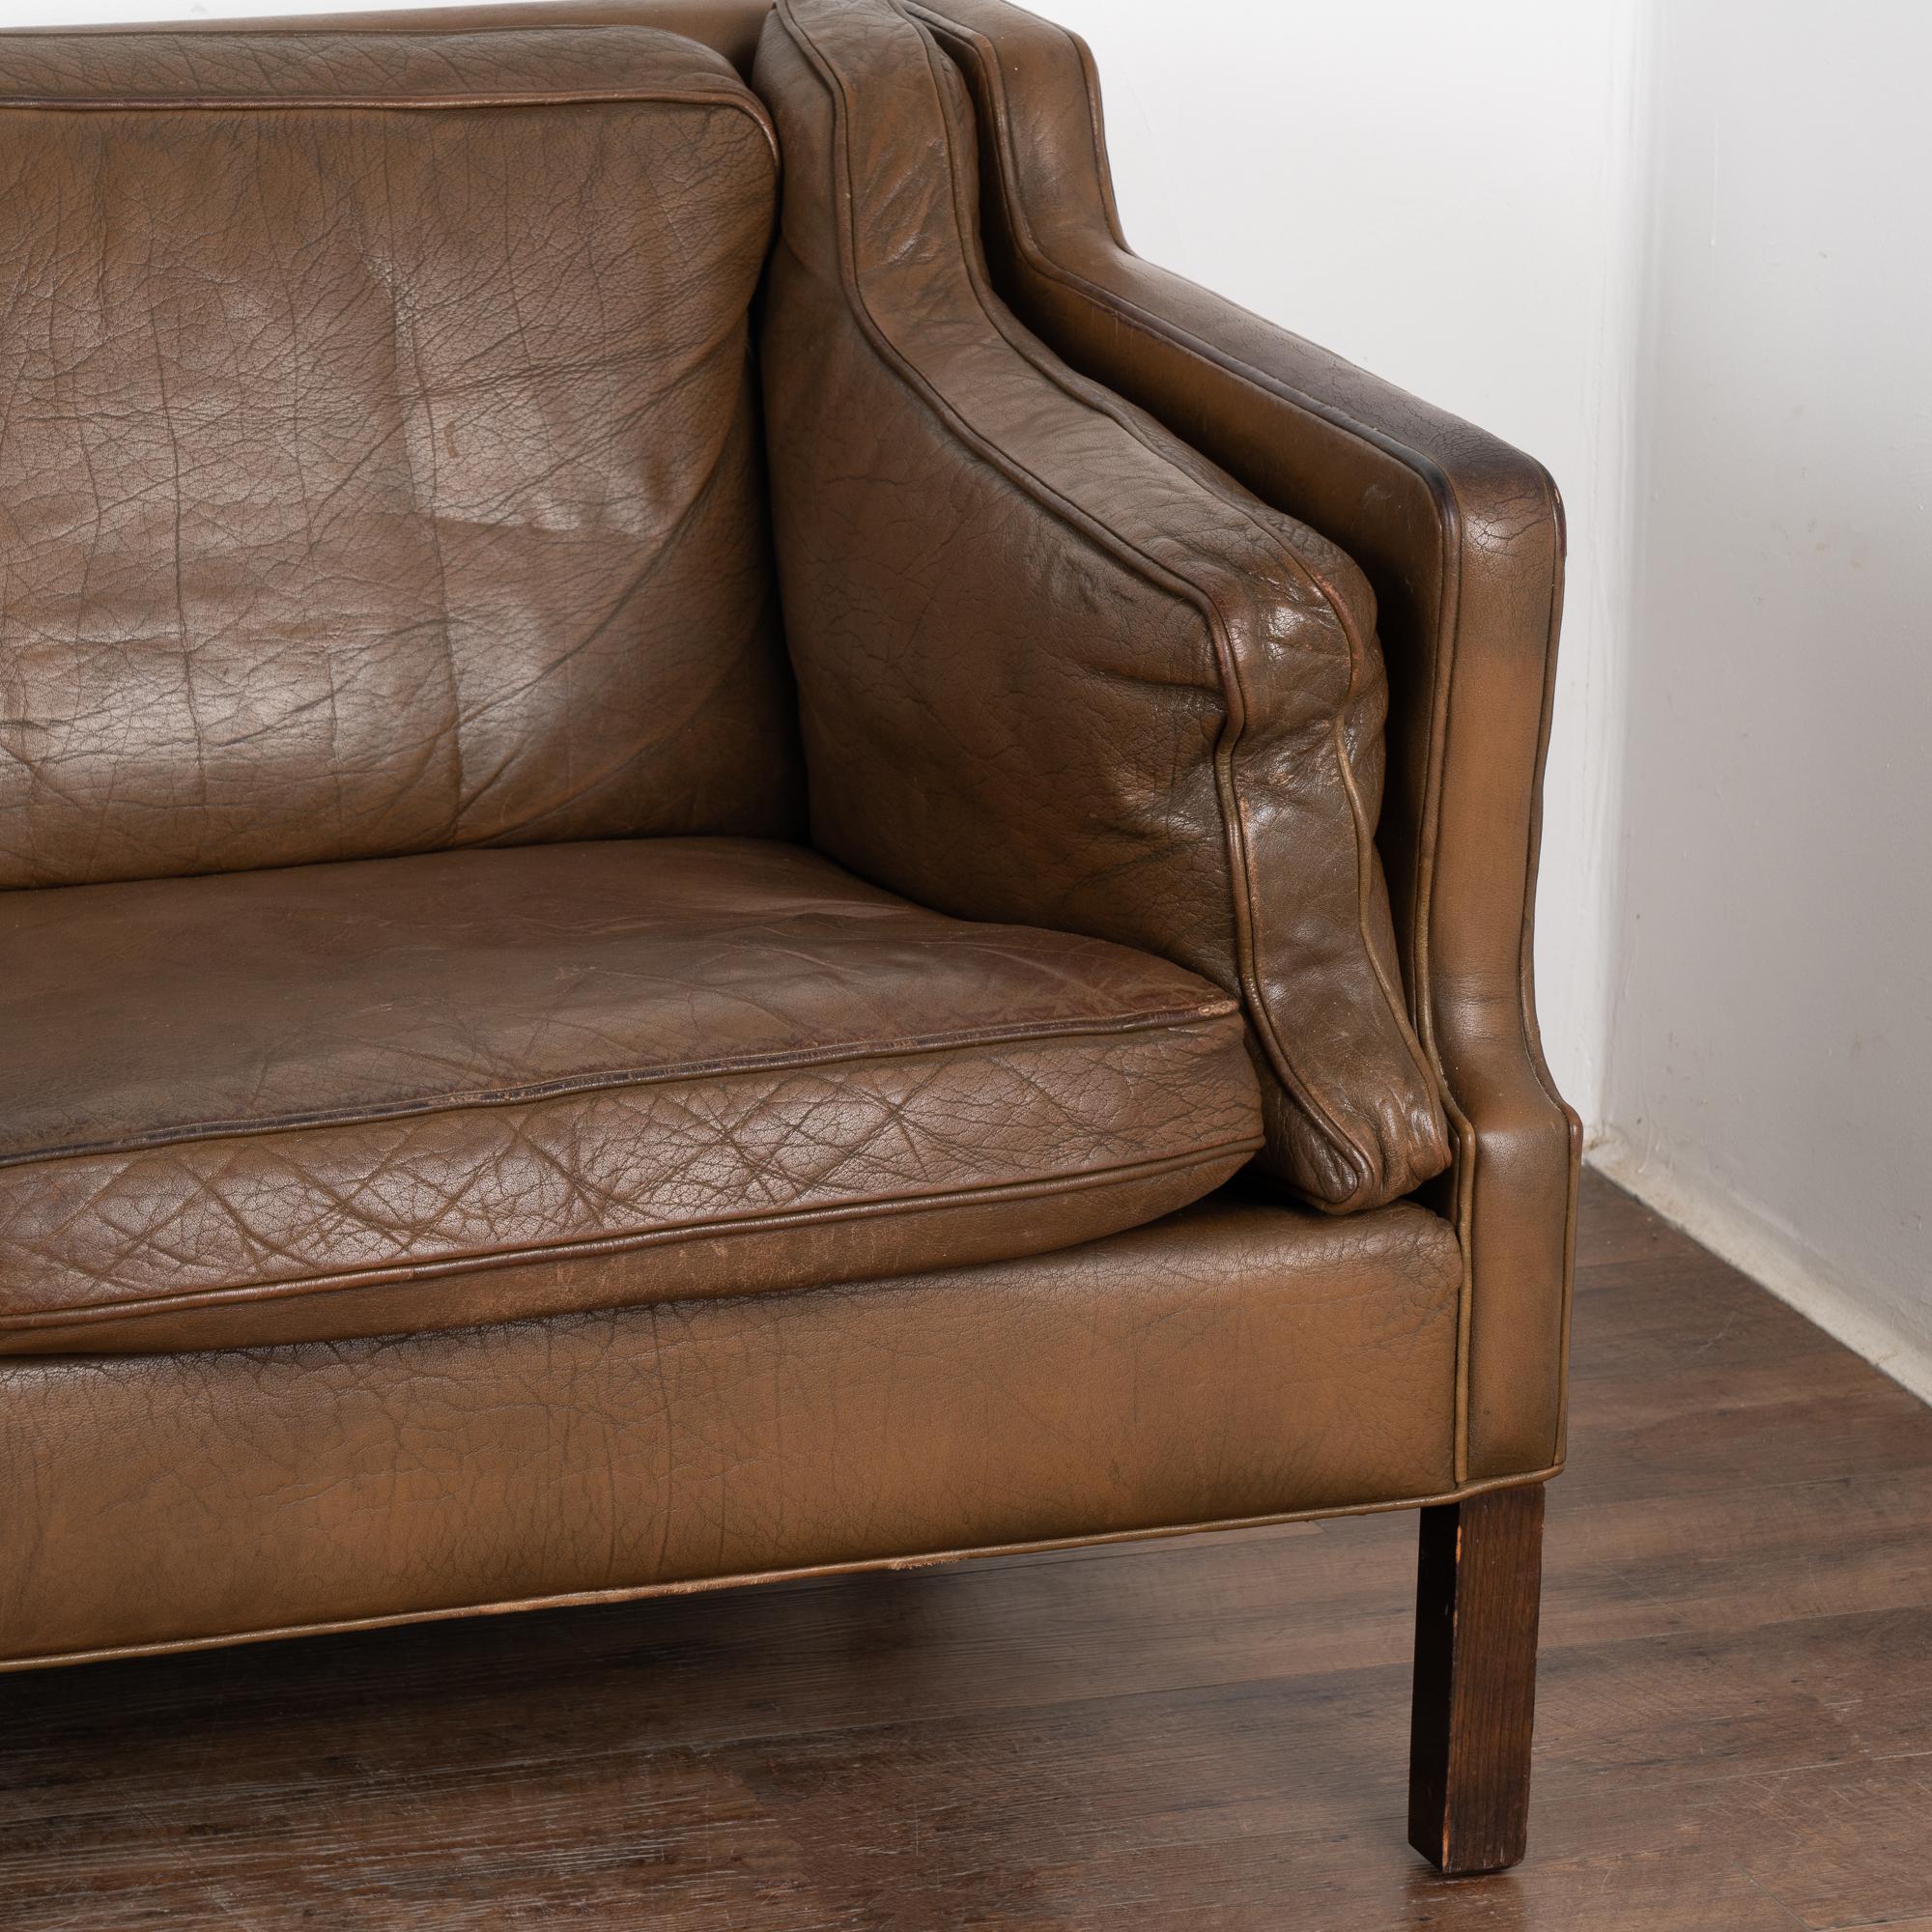 Mid Century Brown Leather Three Seat Sofa, Denmark circa 1960-70 For Sale 1